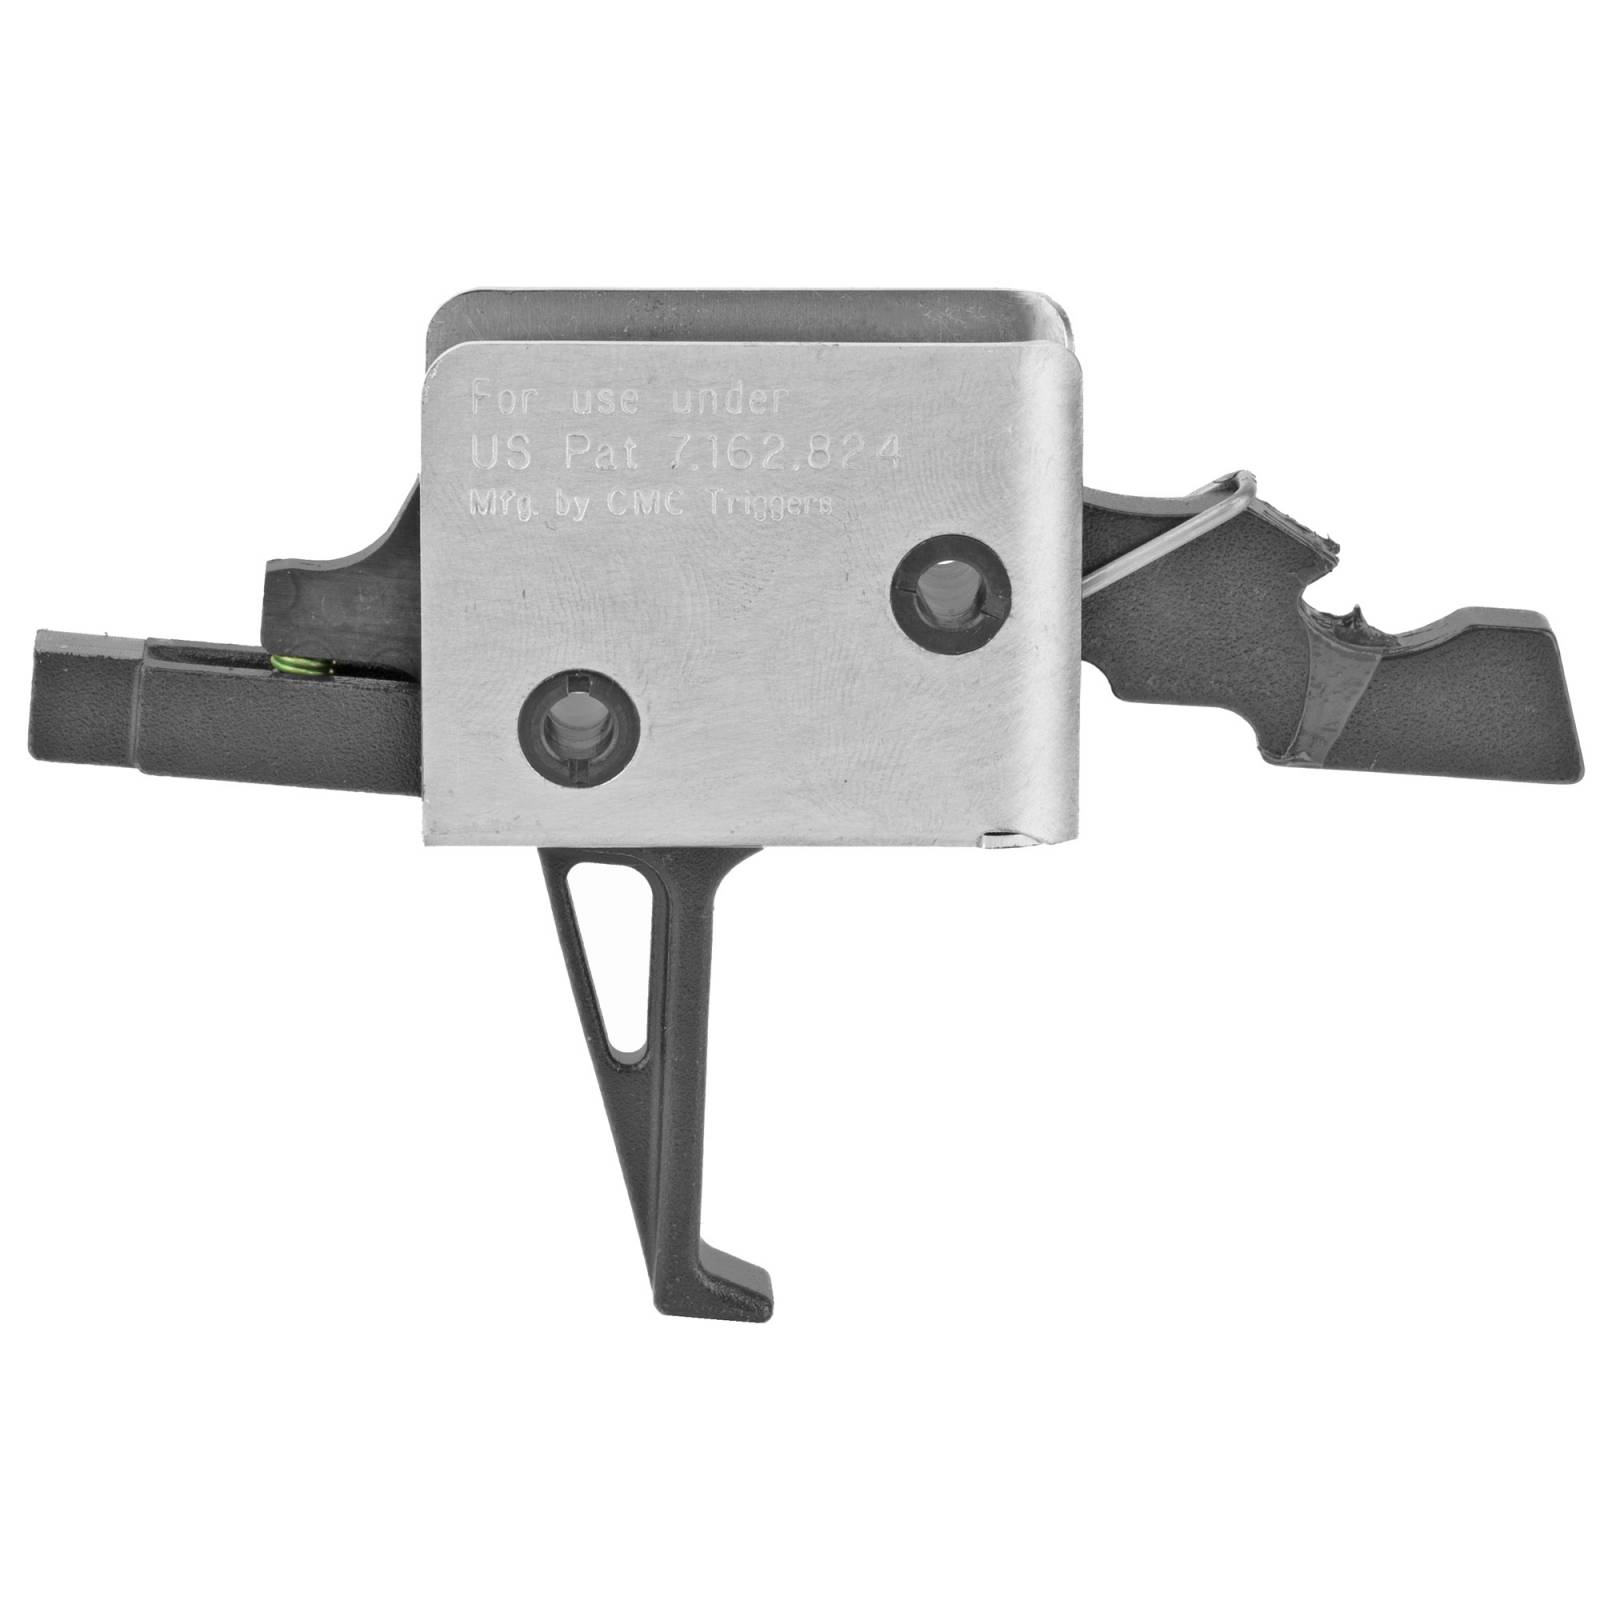 CMC Triggers 91503 Drop-In AR-15, AR-10 Single-Stage Flat 3.00-3.50 lbs